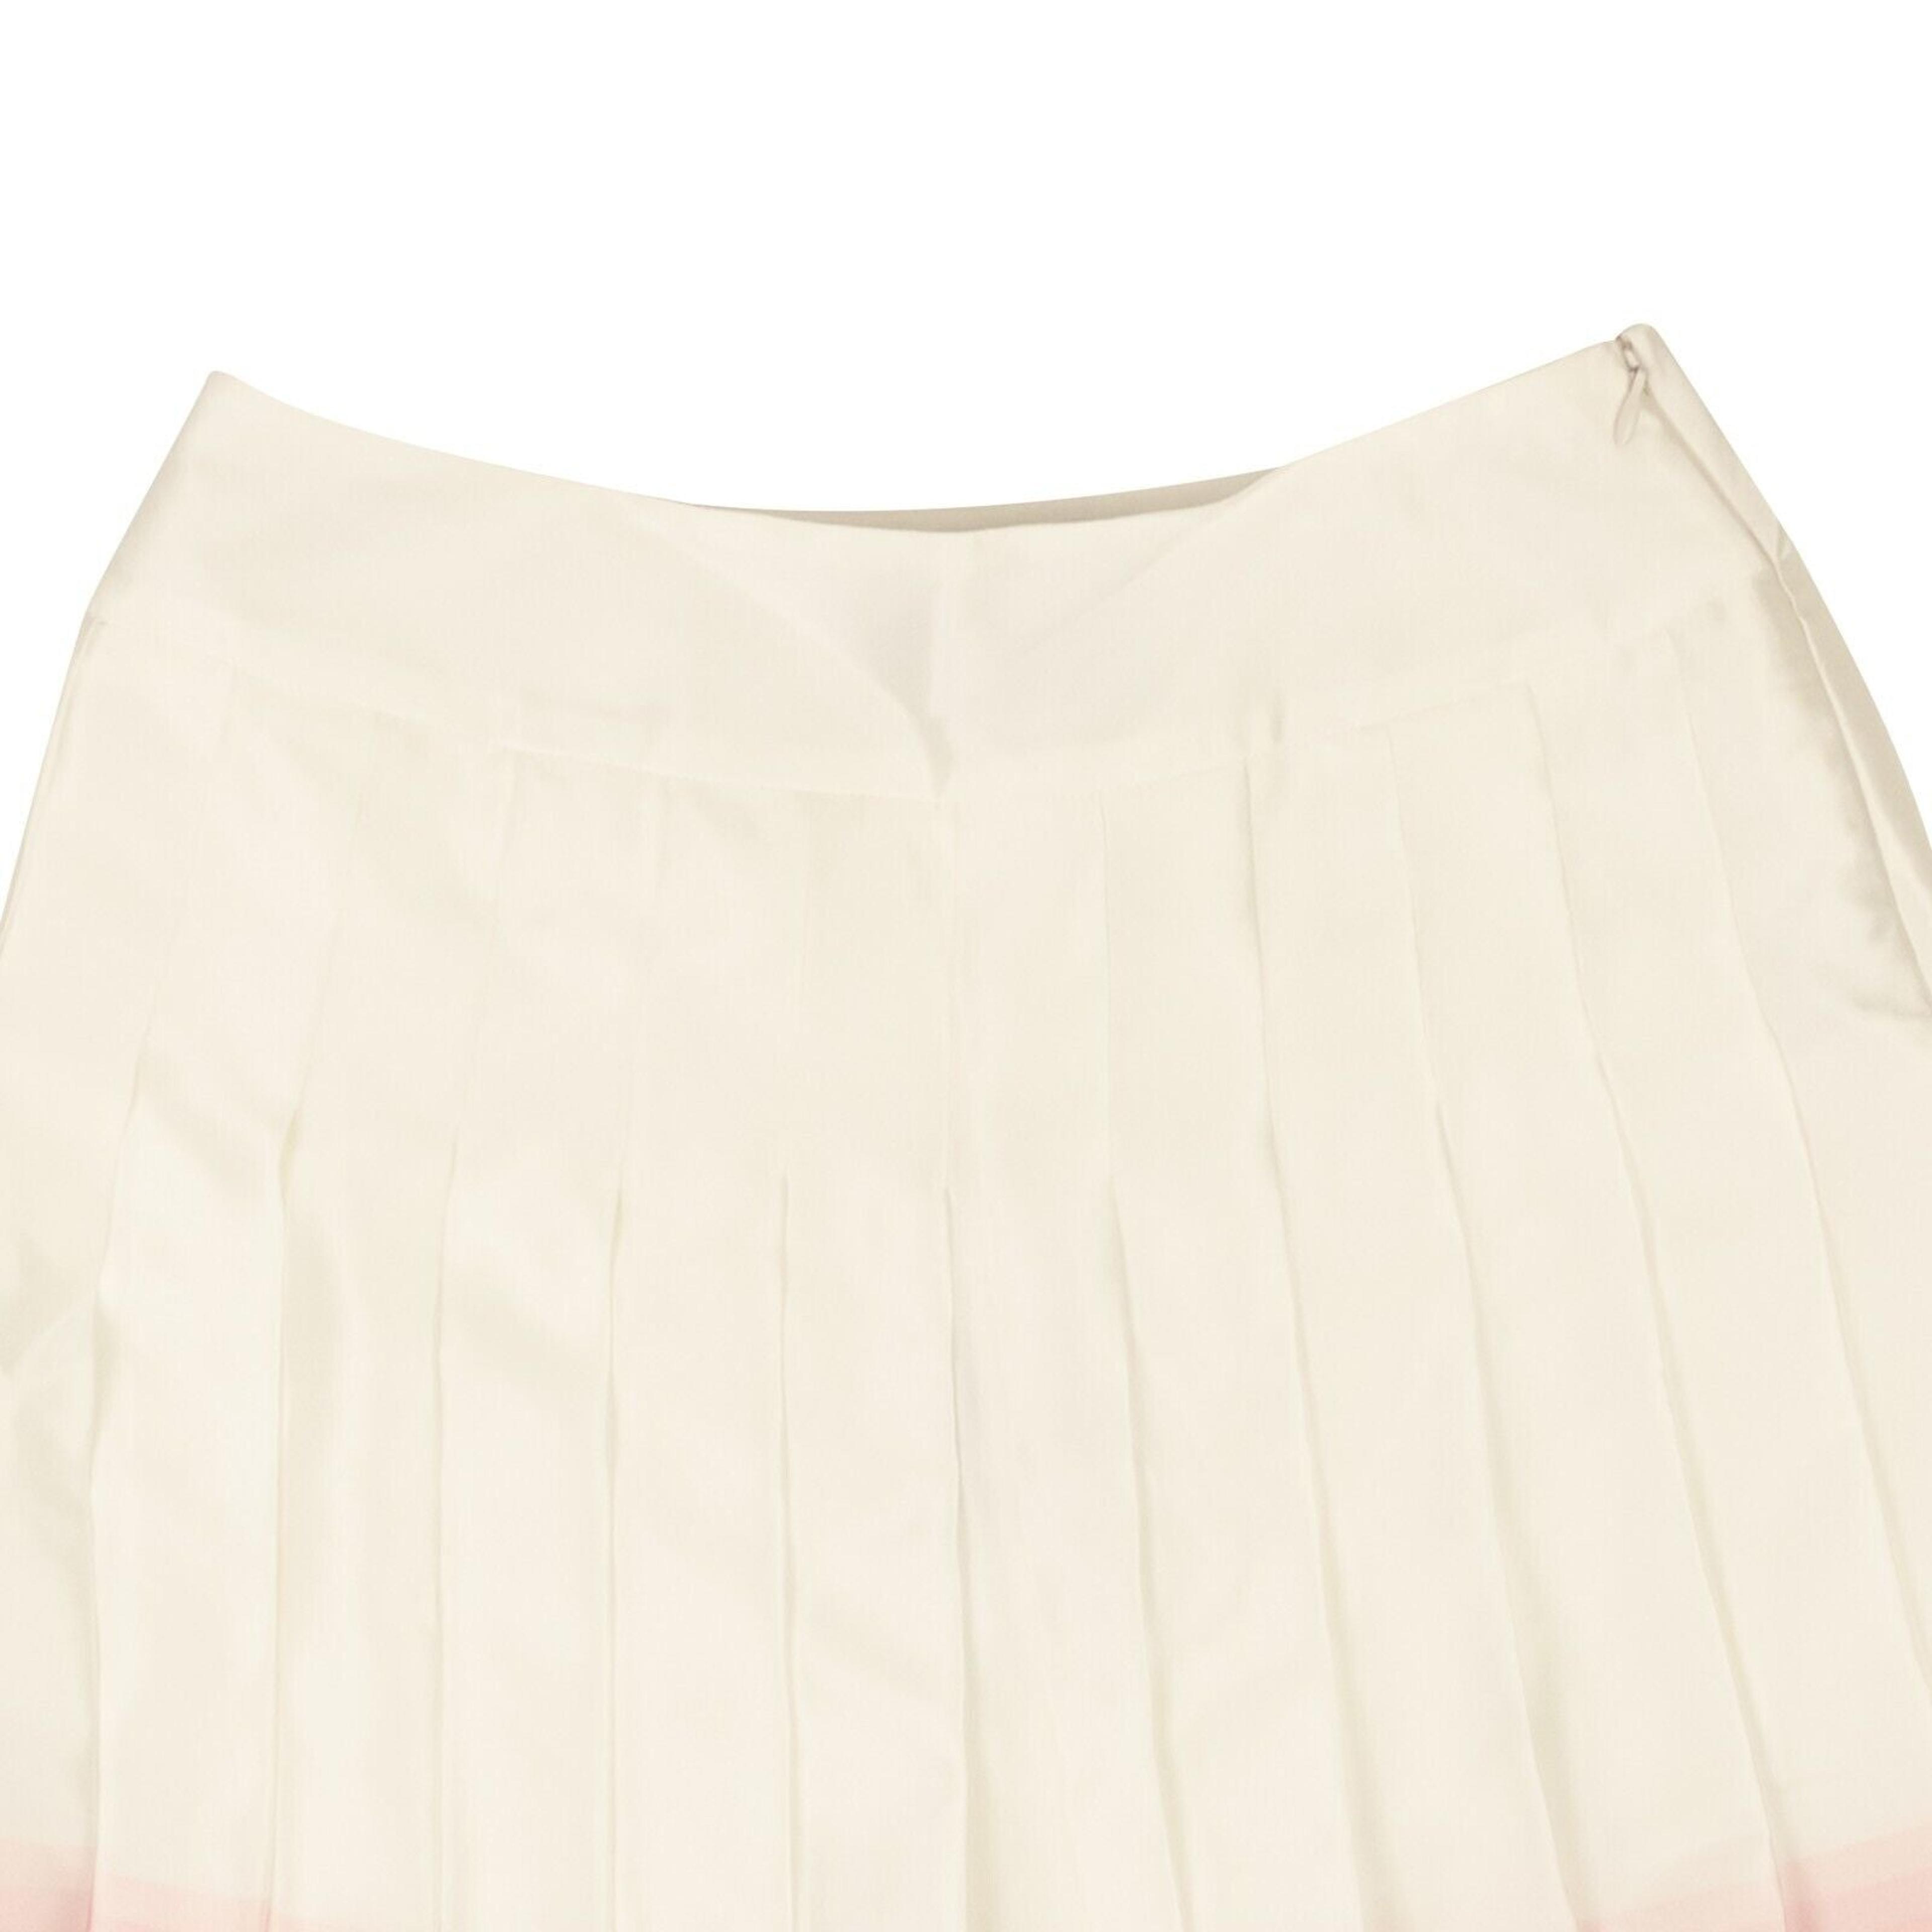 Alternate View 1 of White Satin Pleated Tennis Club Mini Skirt